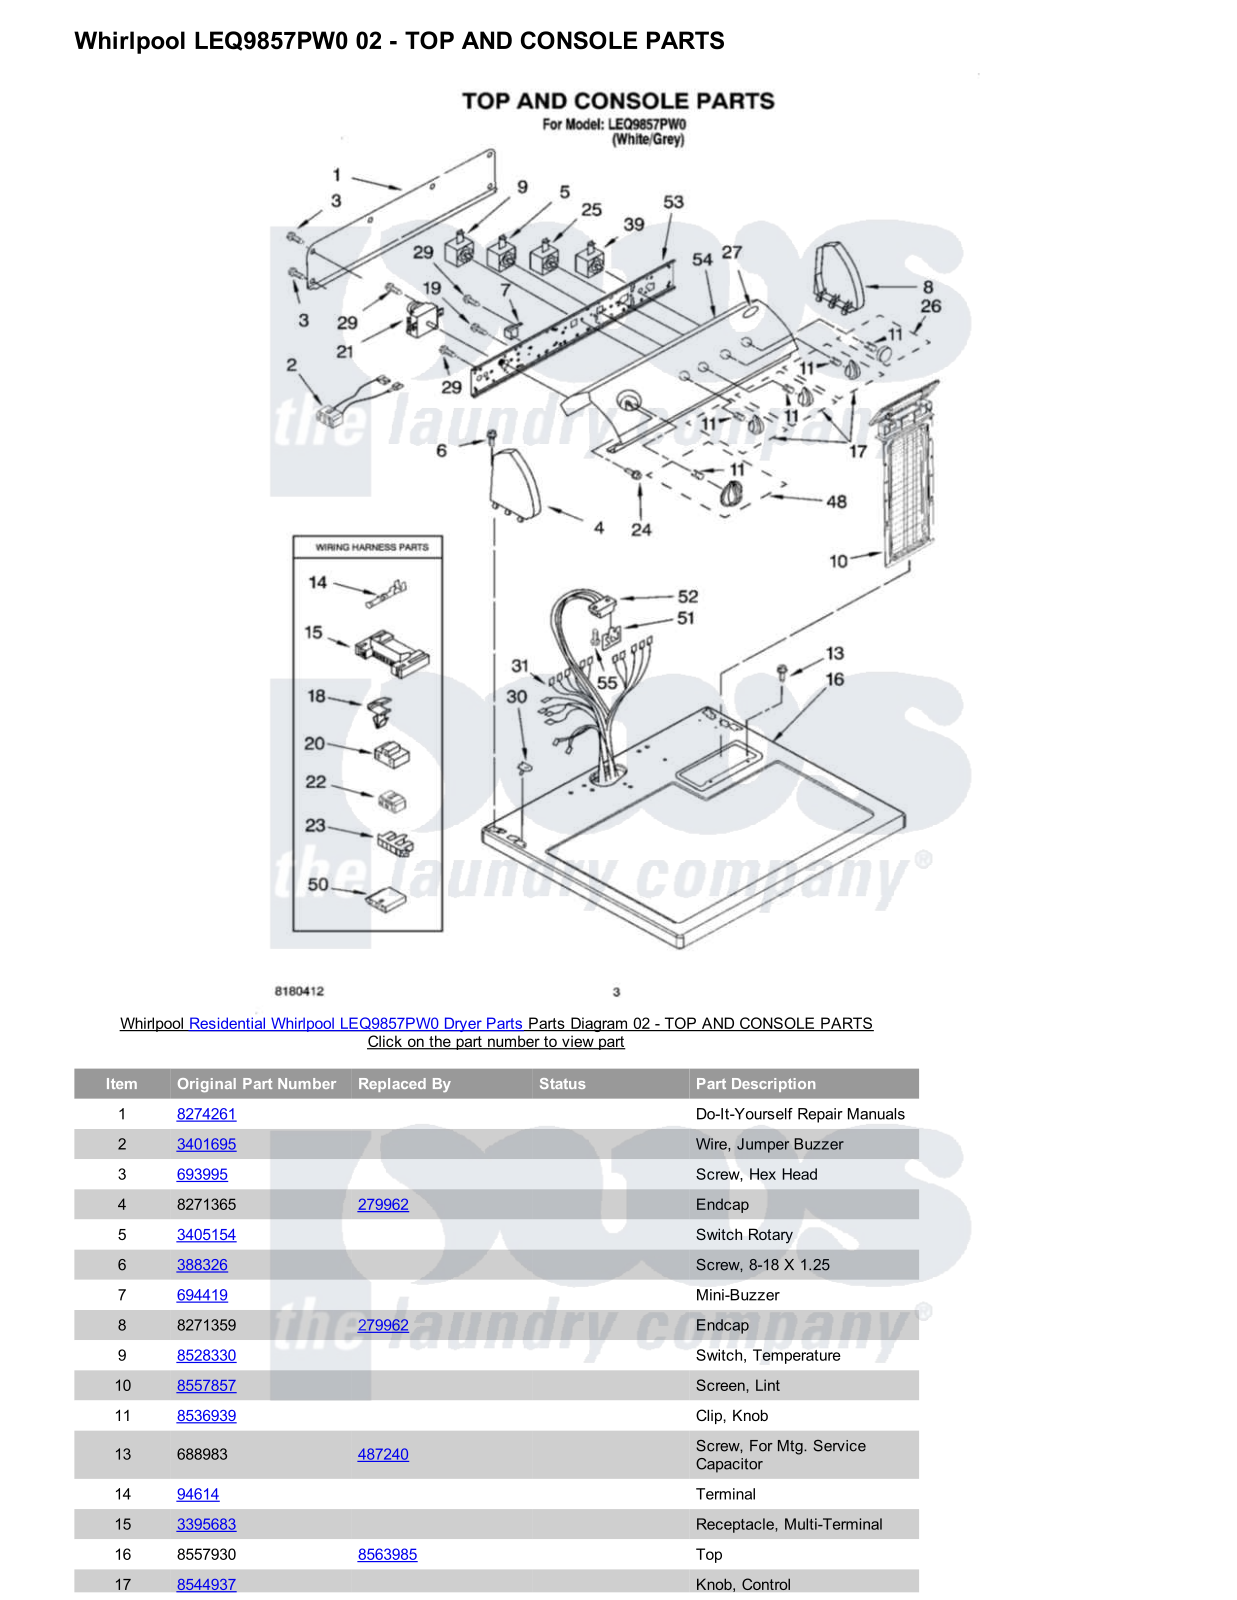 Whirlpool LEQ9857PW0 Parts Diagram